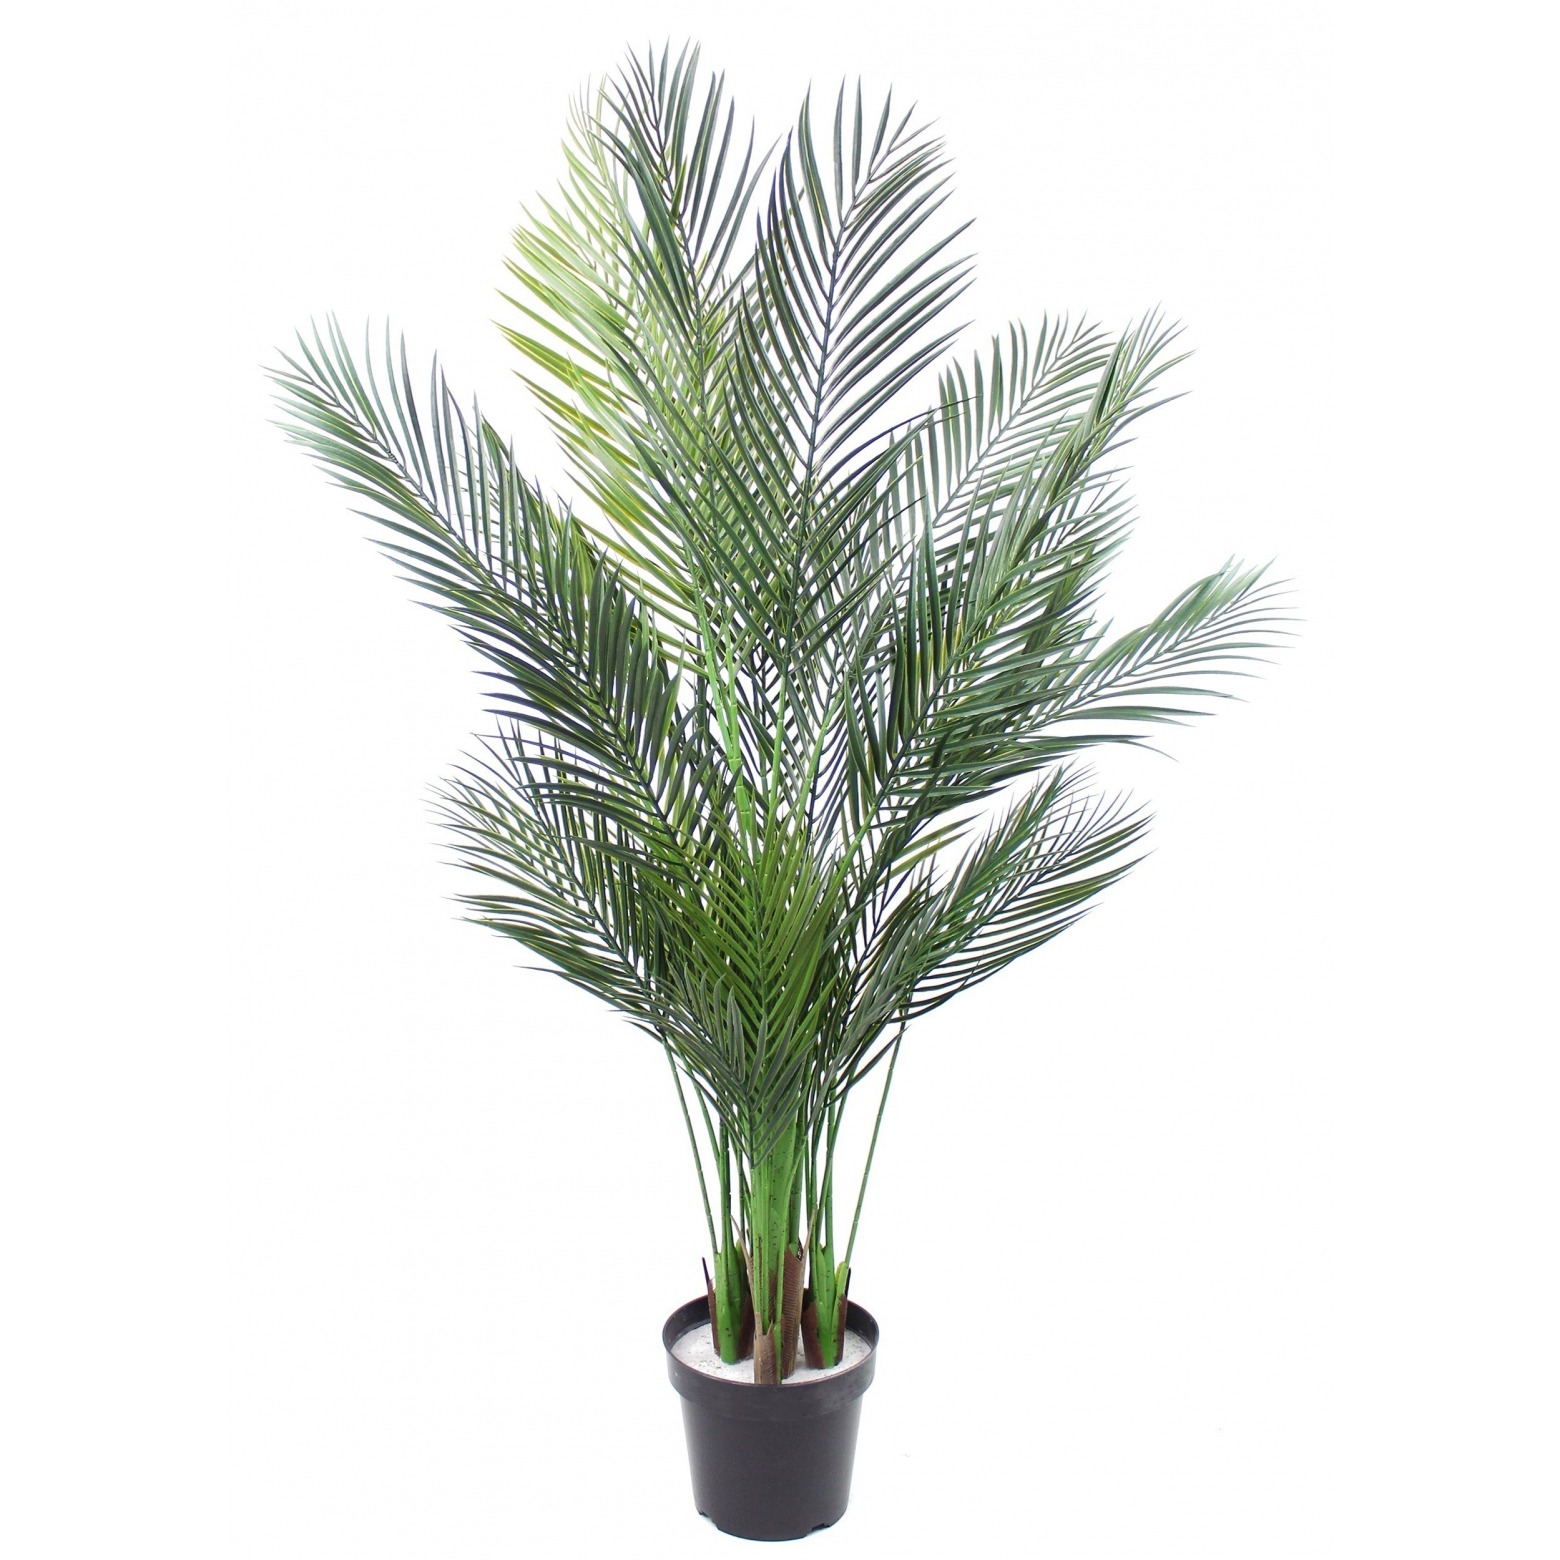 Choisir son palmier d'intérieur - Gamm vert